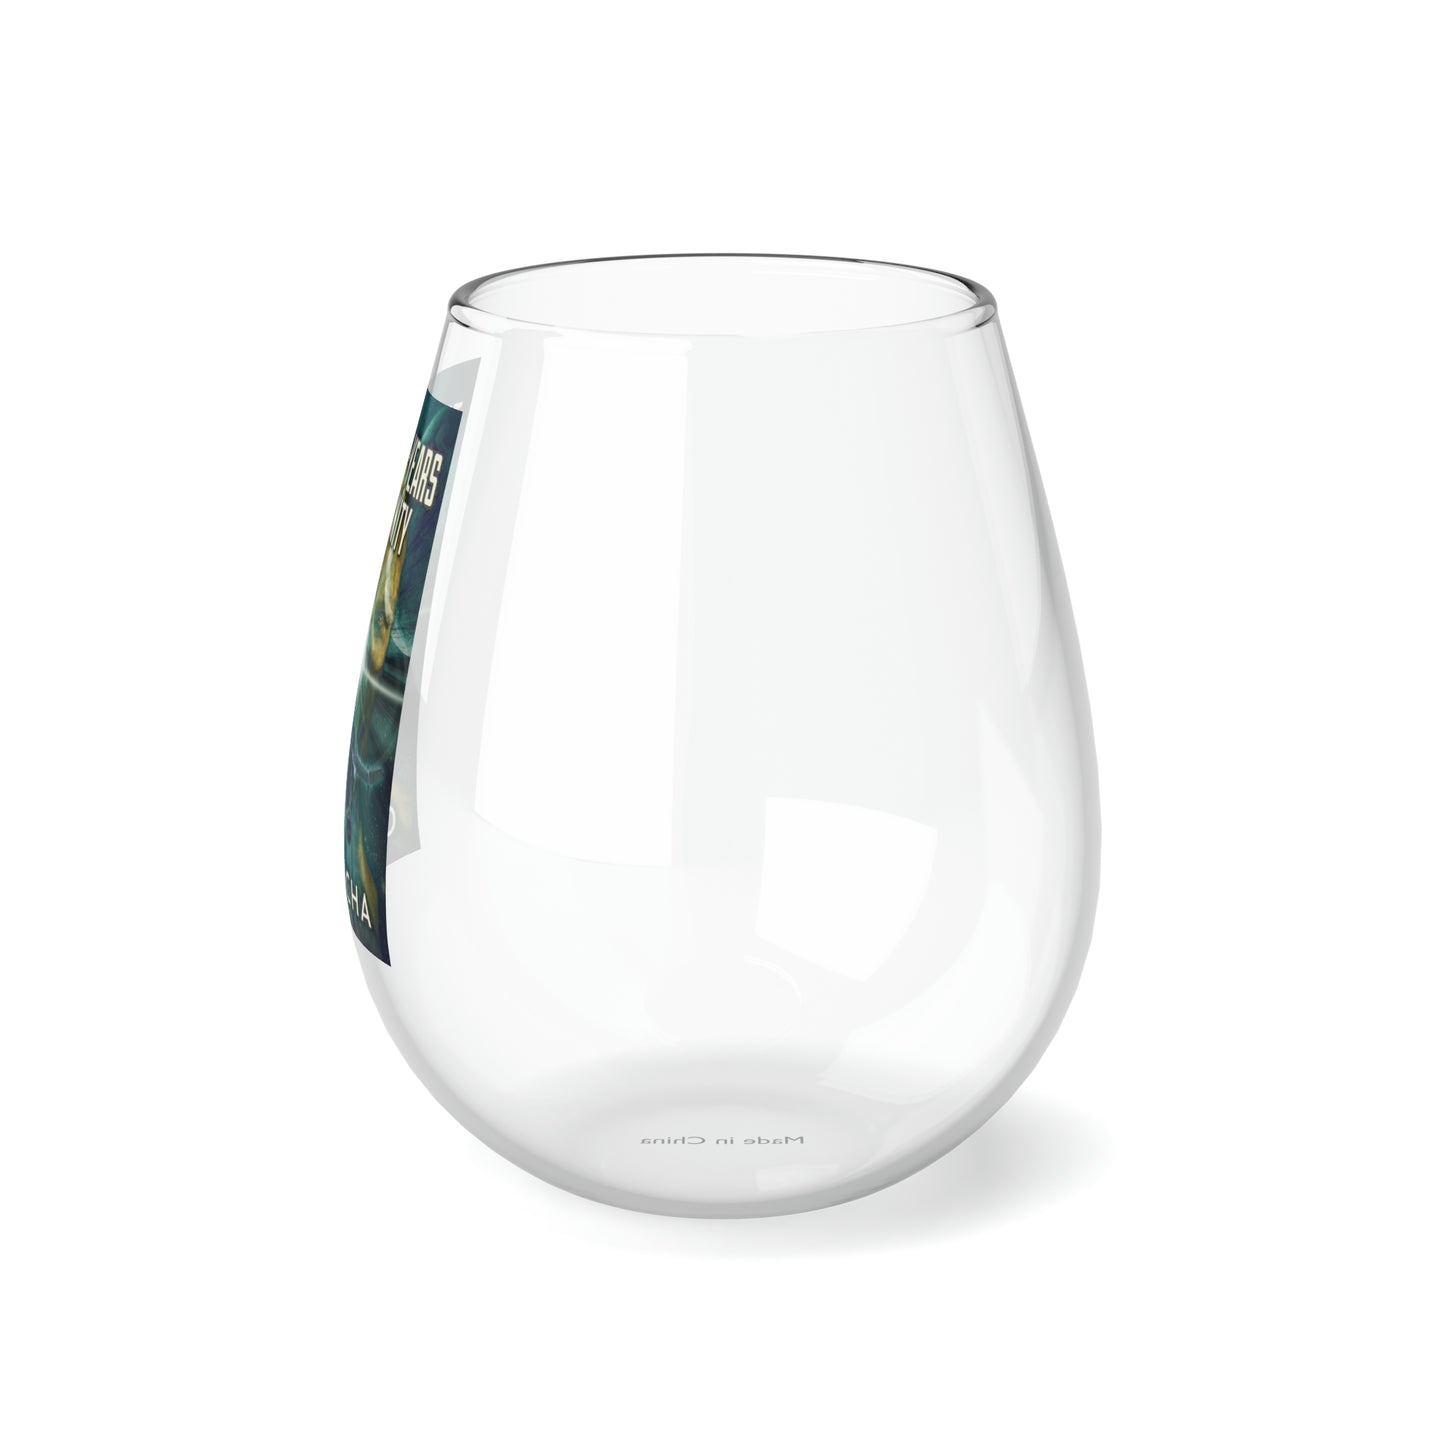 Ten Light-Years To Insanity - Stemless Wine Glass, 11.75oz